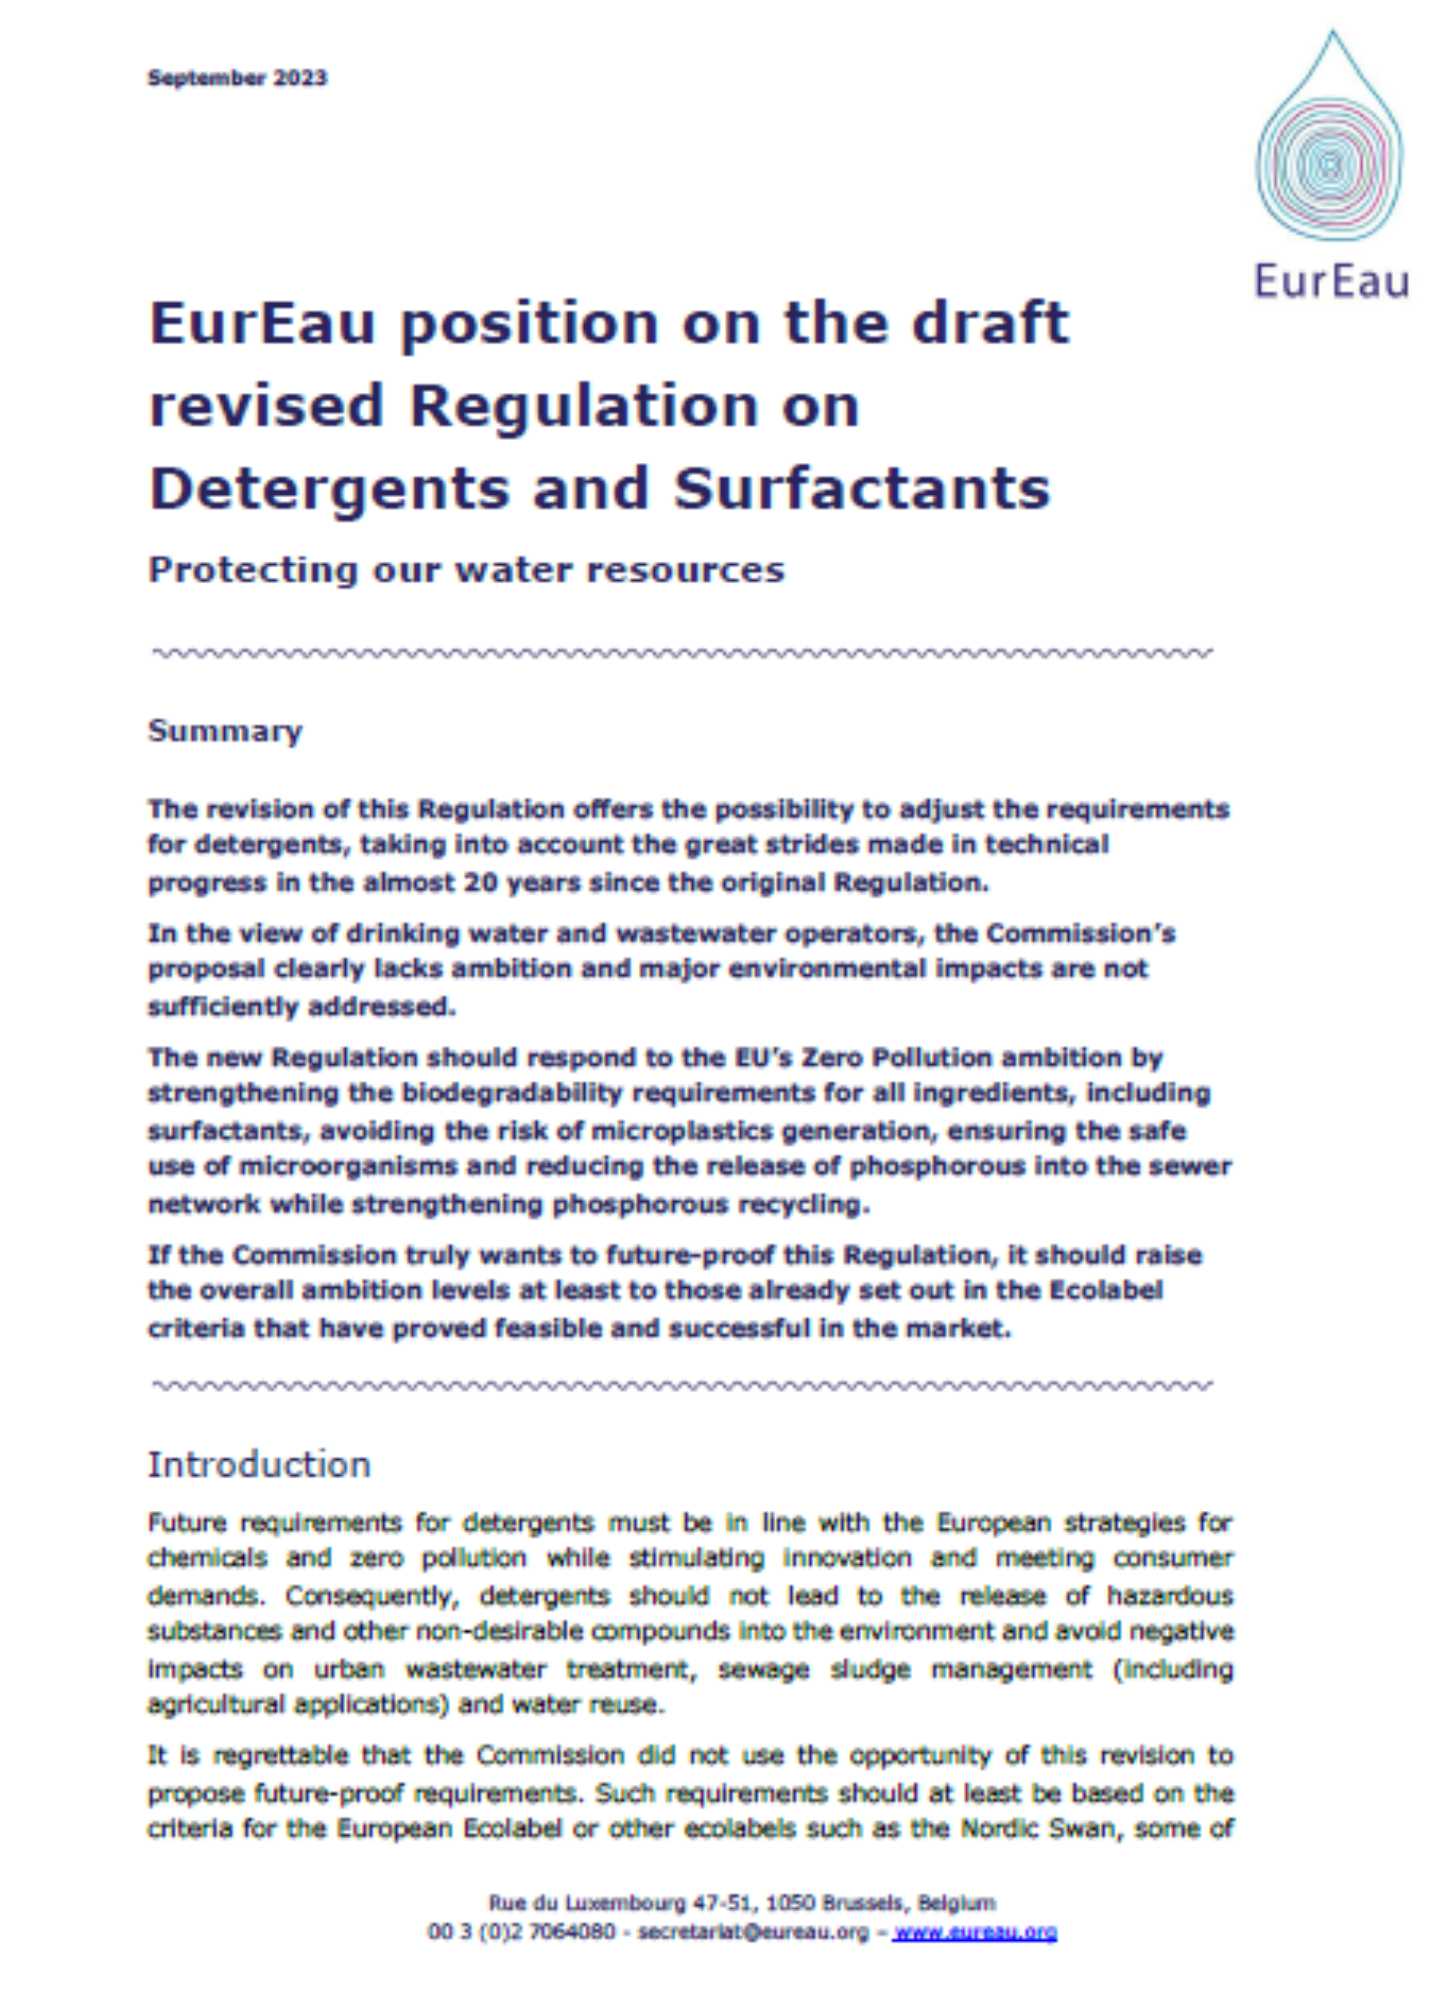 EurEau position on the Detergents Regulation